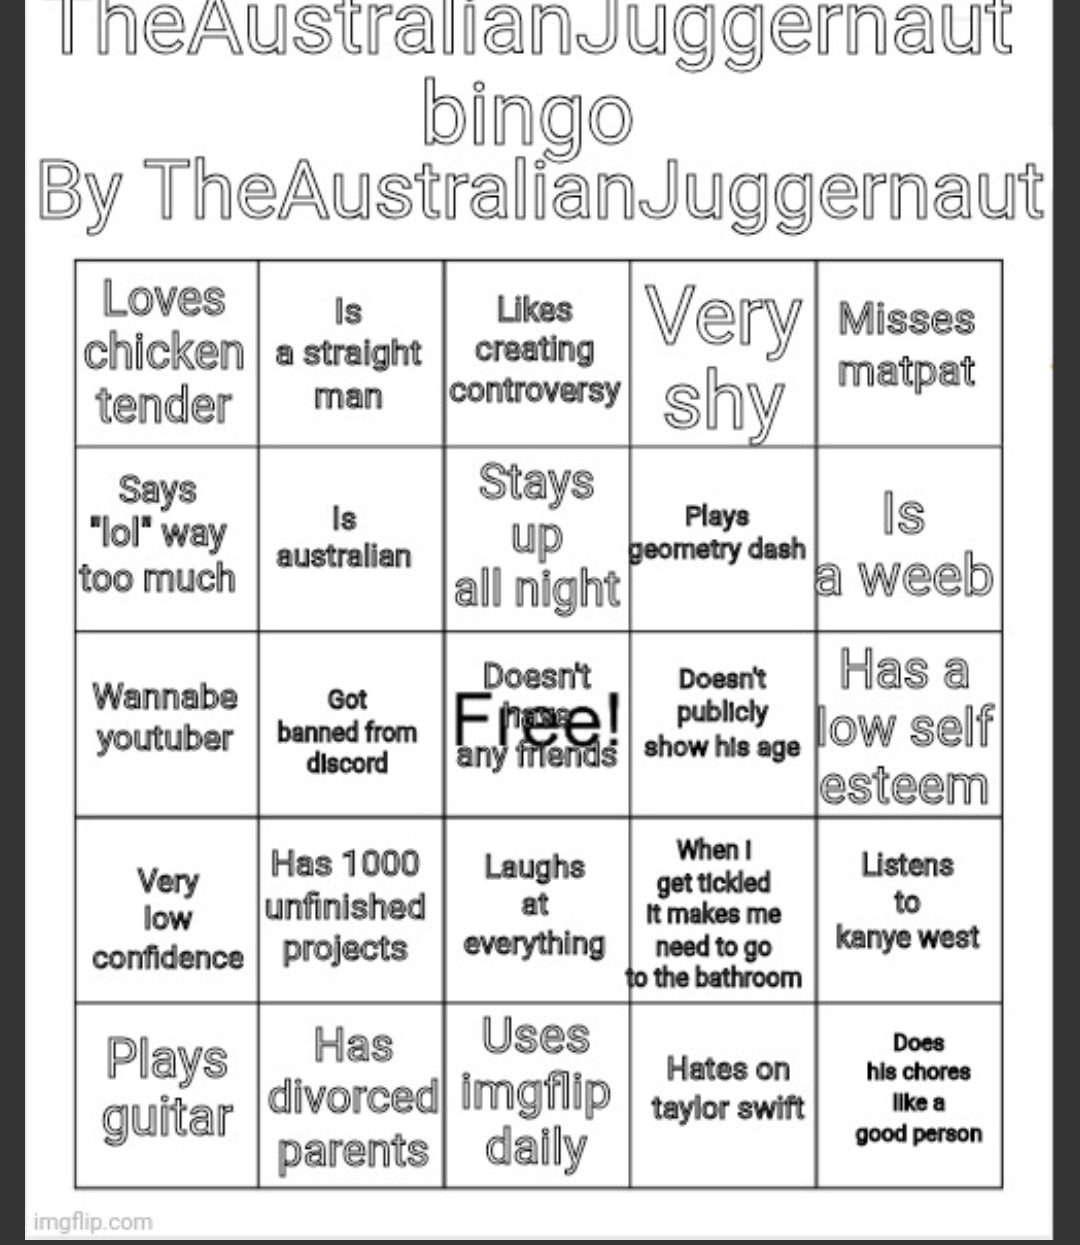 TheAustralianJuggernaut bingo Blank Meme Template